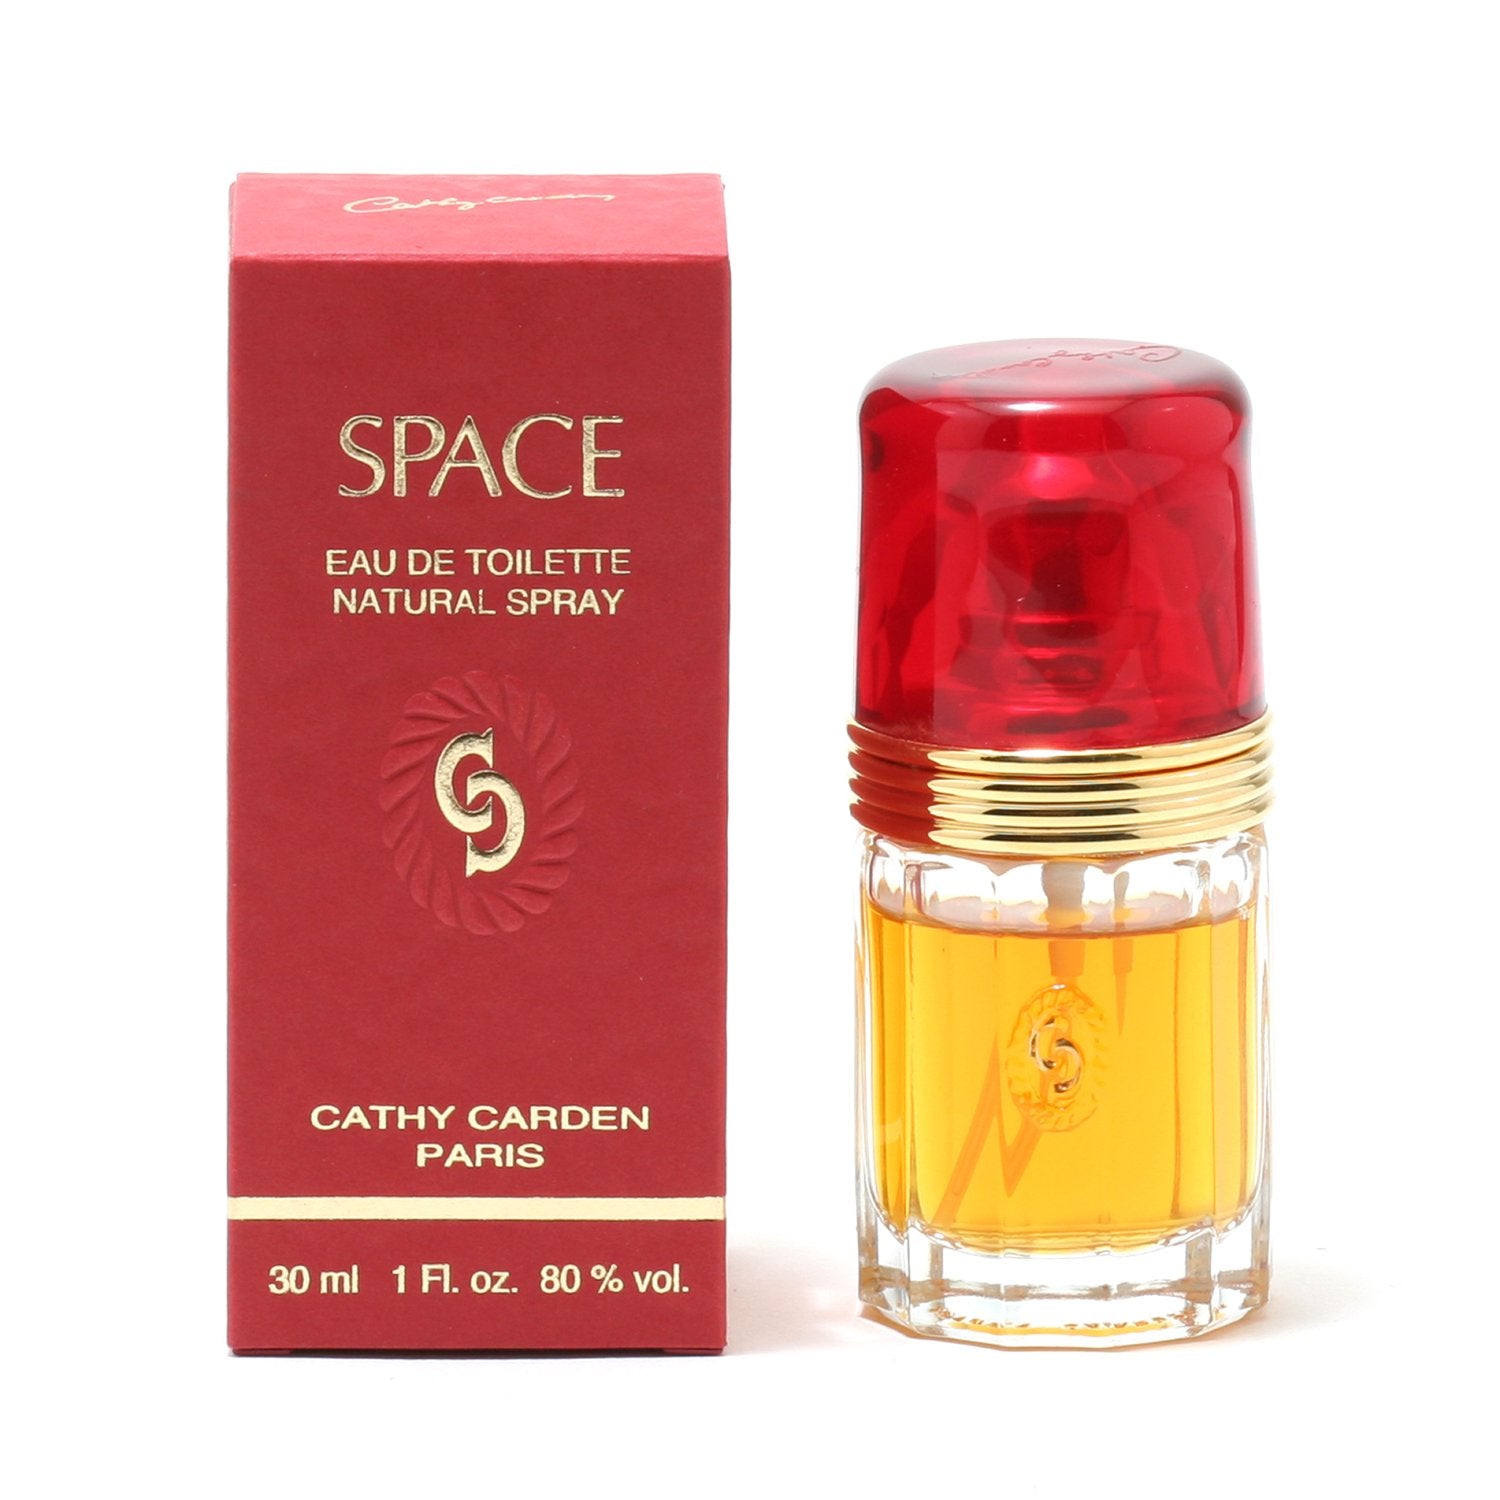 Perfume - SPACE FOR WOMEN BY CATHY CARDEN - EAU DE TOILETTE SPRAY, 1.0 OZ